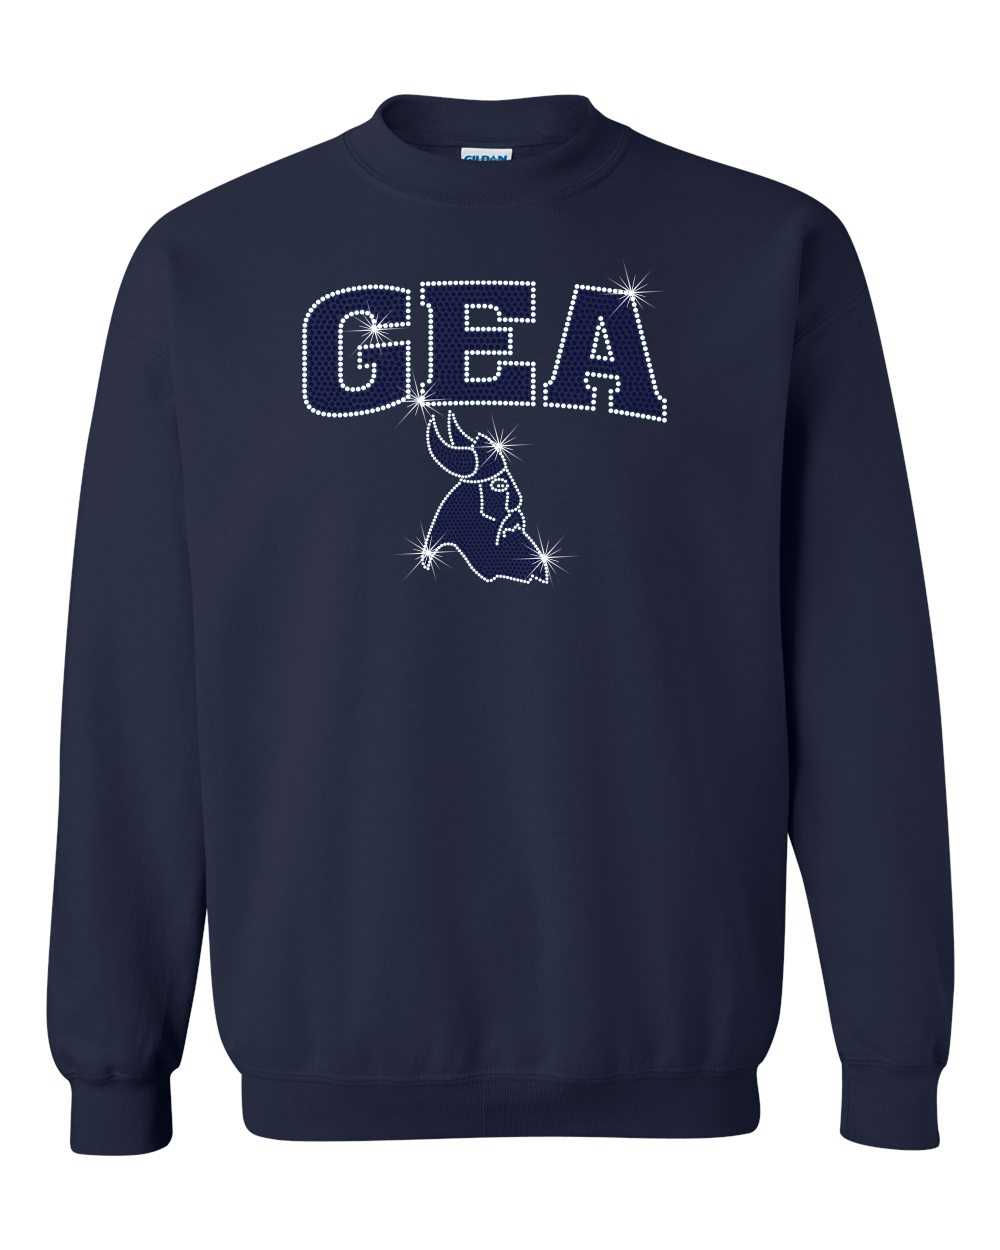 GEA Unisex Crewneck Sweatshirt With Sparkle GEA Logos